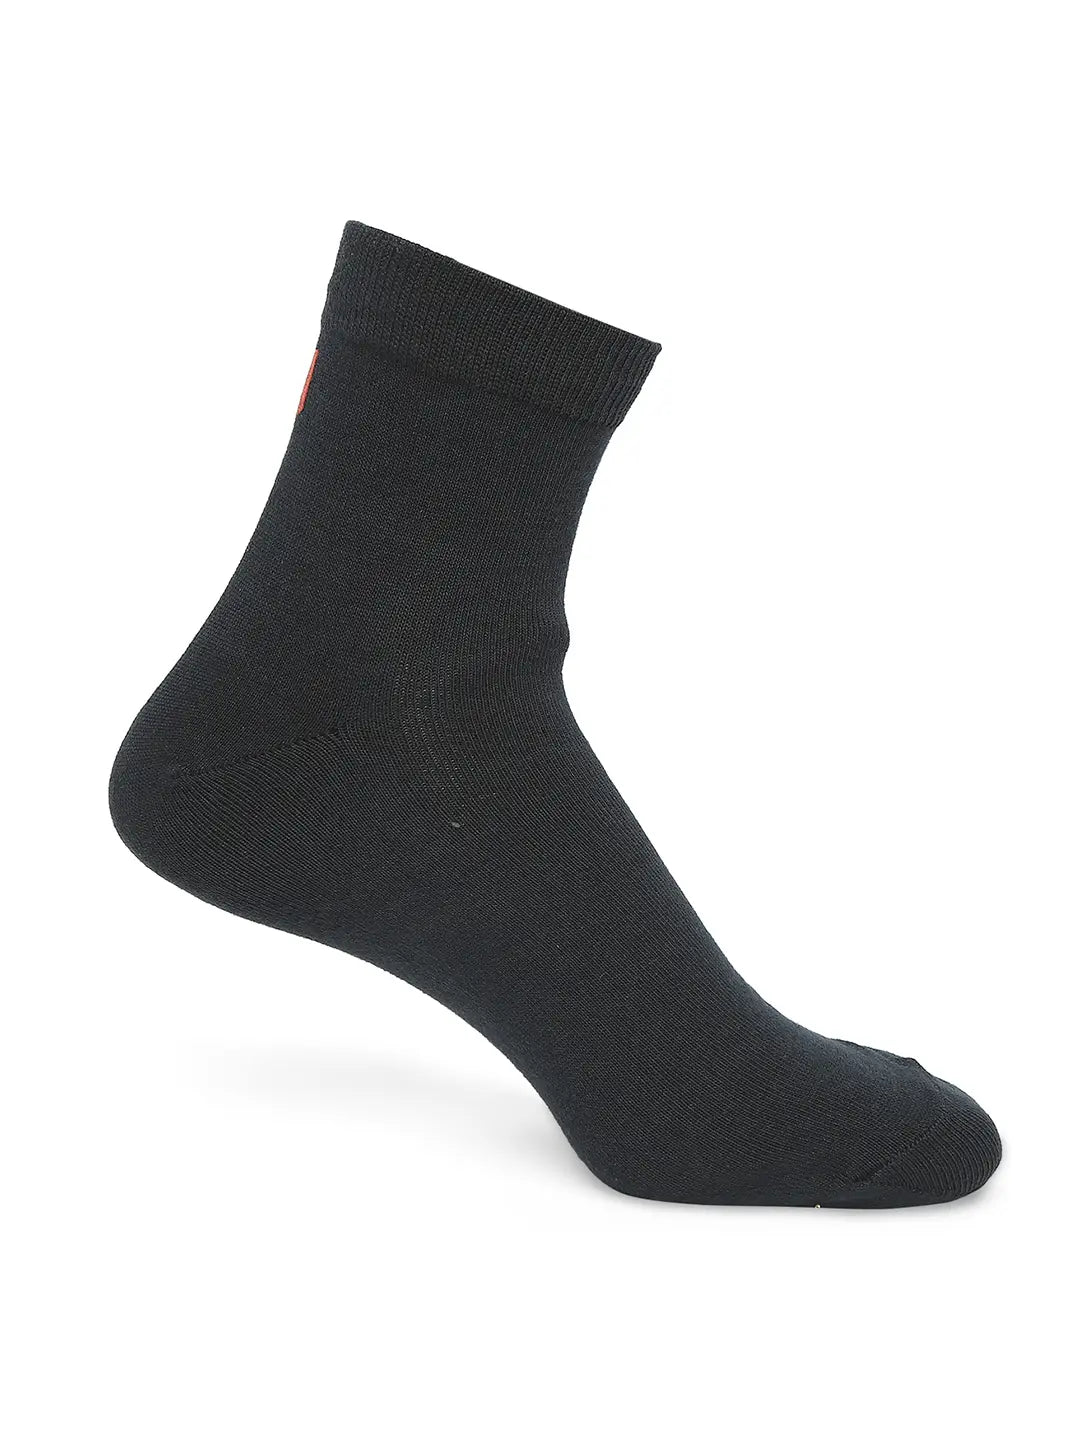 Men Premium Navy & Maroon Ankle Length Socks - Pack Of 2- Underjeans by Spykar